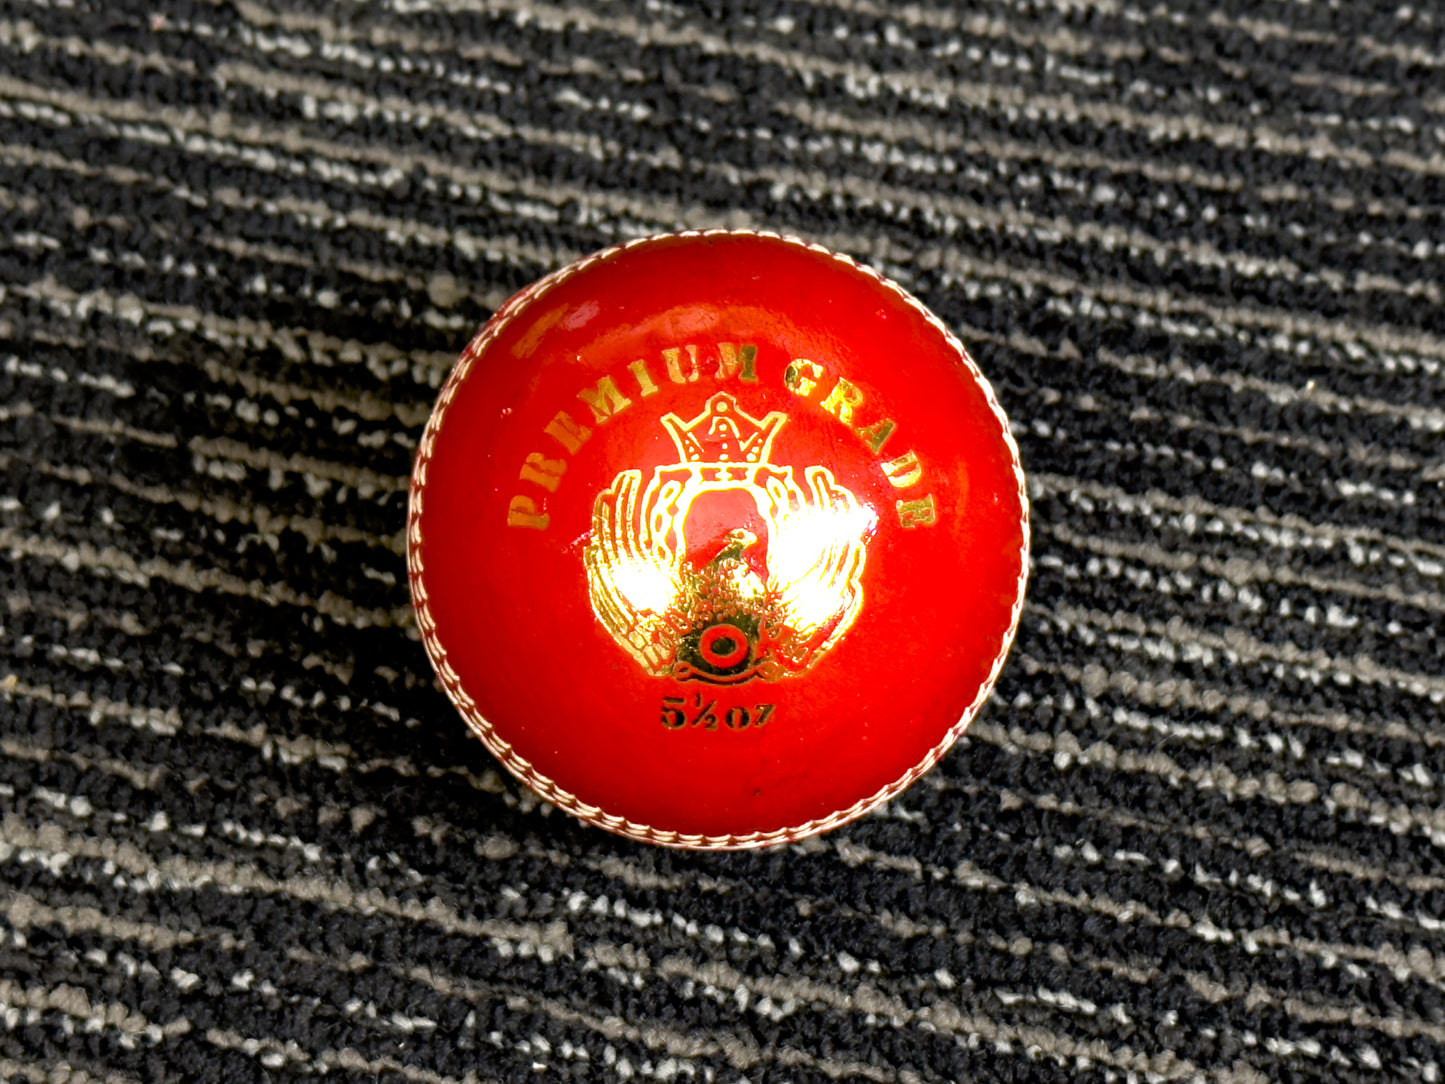 Black Ash Premium grade Pack of 6 Red Cricket Leather Balls 156 Grams